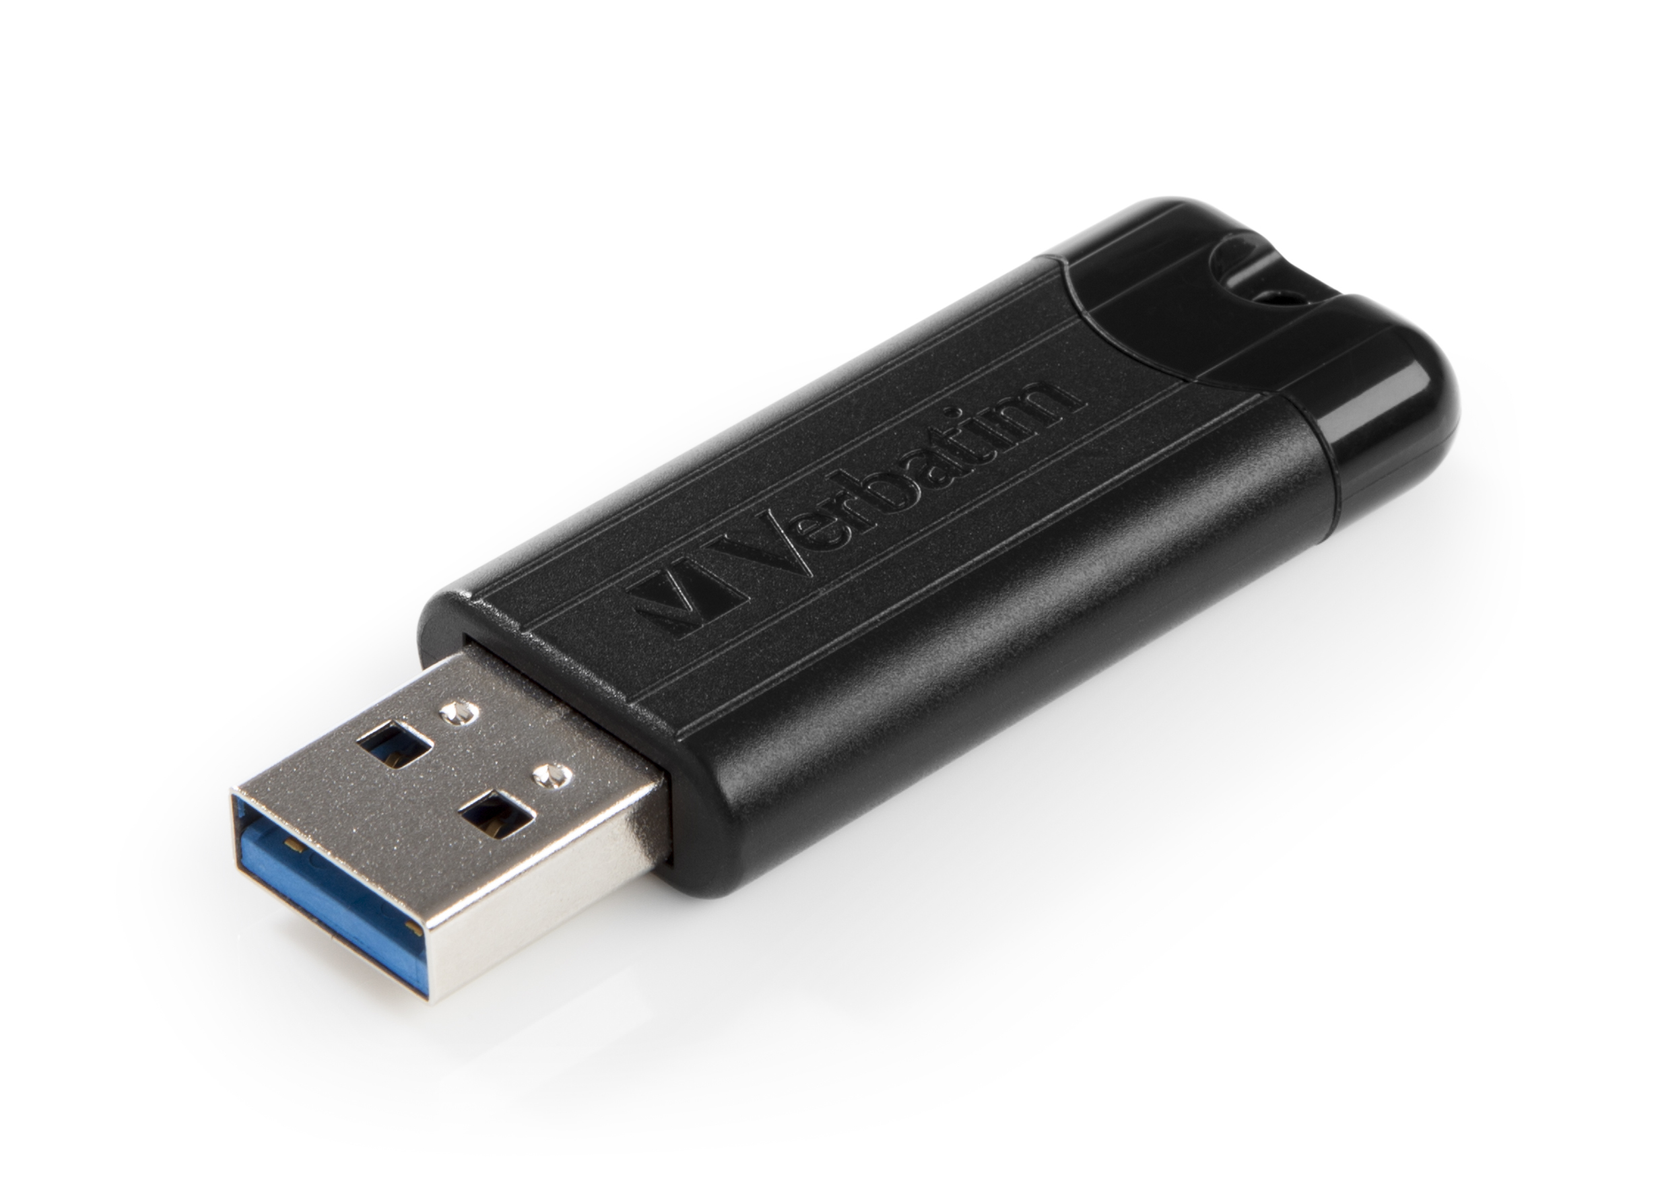 USB-Stick (Schwarz, 49320 GB) VERBATIM 256